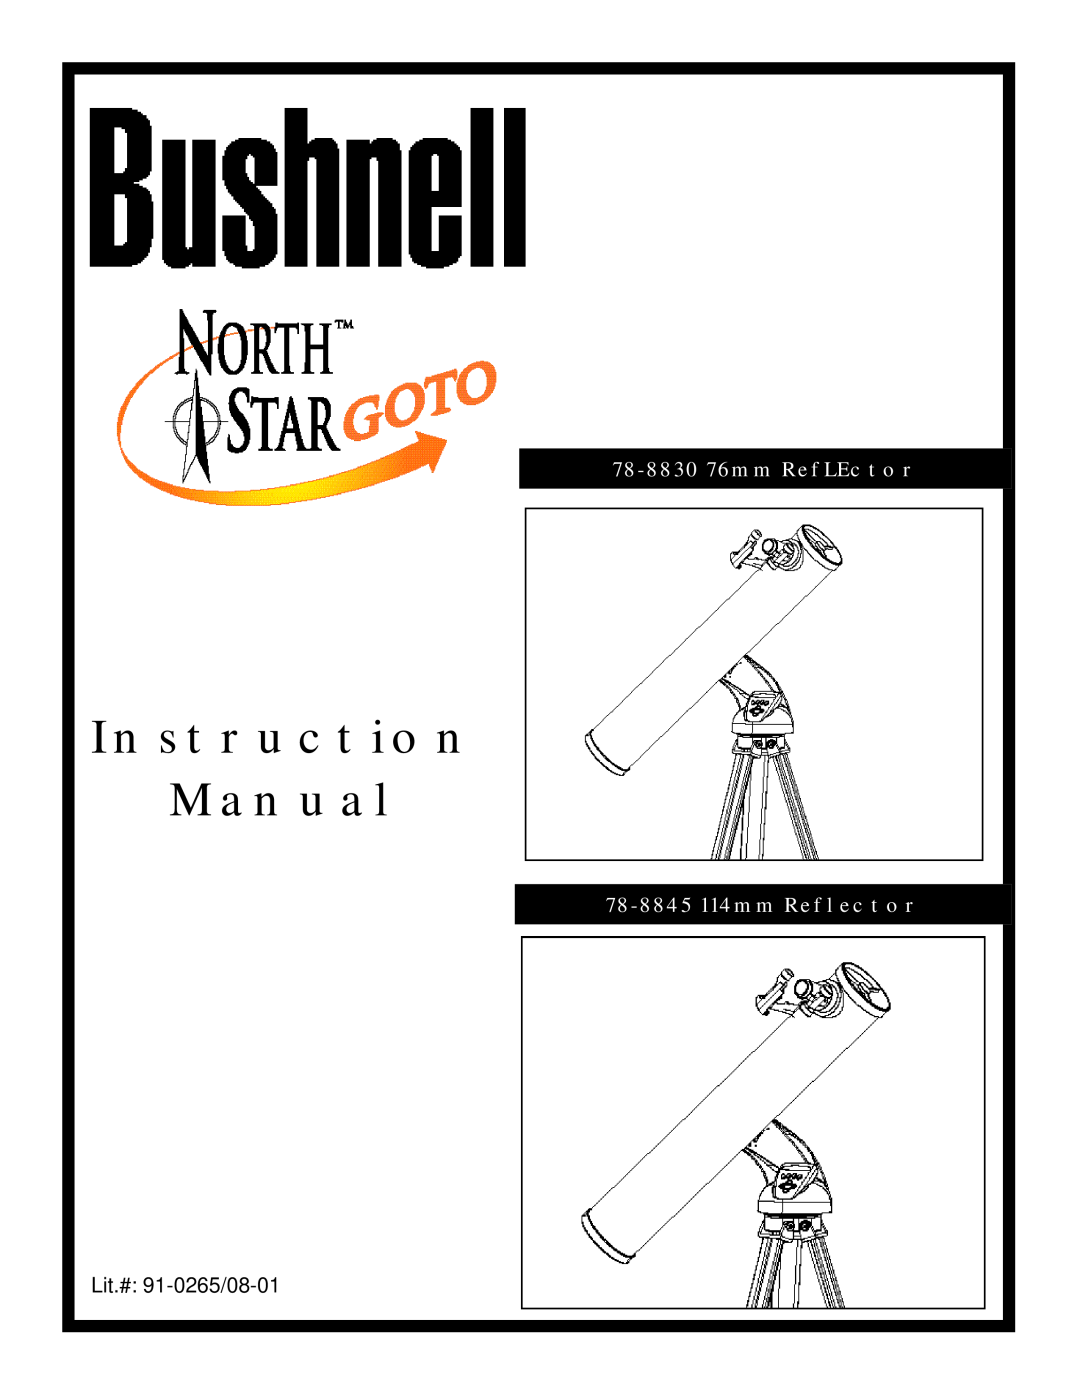 Bushnell North Star GOTO instruction manual 78-883076mm RefLEctor, 78-8845114mm Reflector, Instruction Manual 